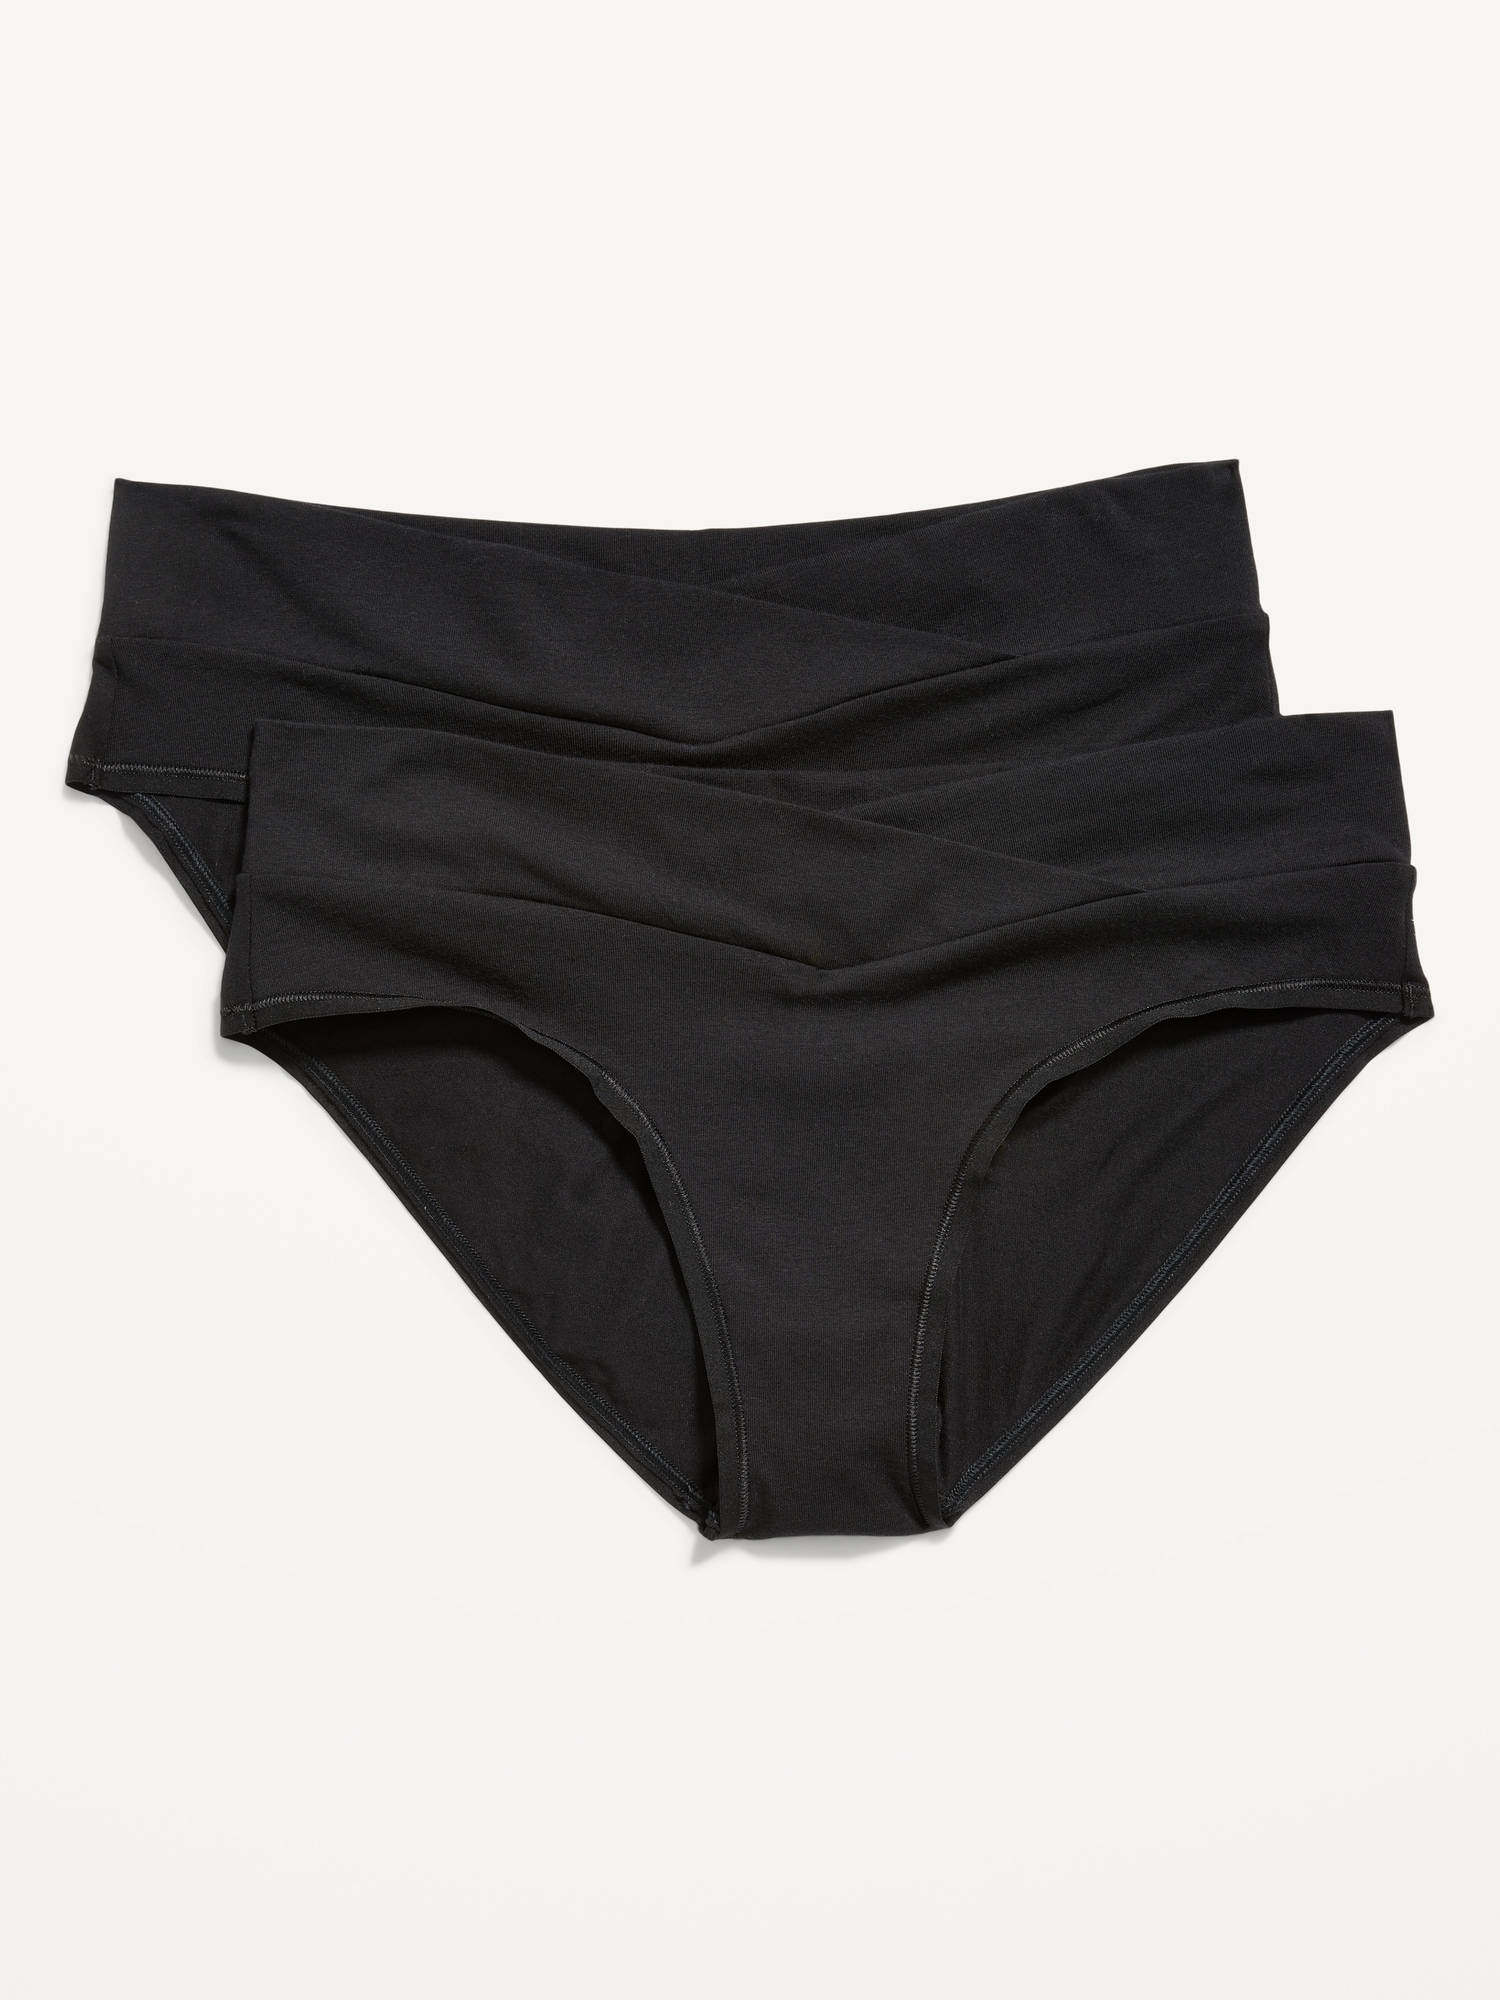 81 Pieces Yacht & Smith Womens Black Underwear, Panties In Bulk, 95% Cotton  - Size L - Womens Panties & Underwear - at 